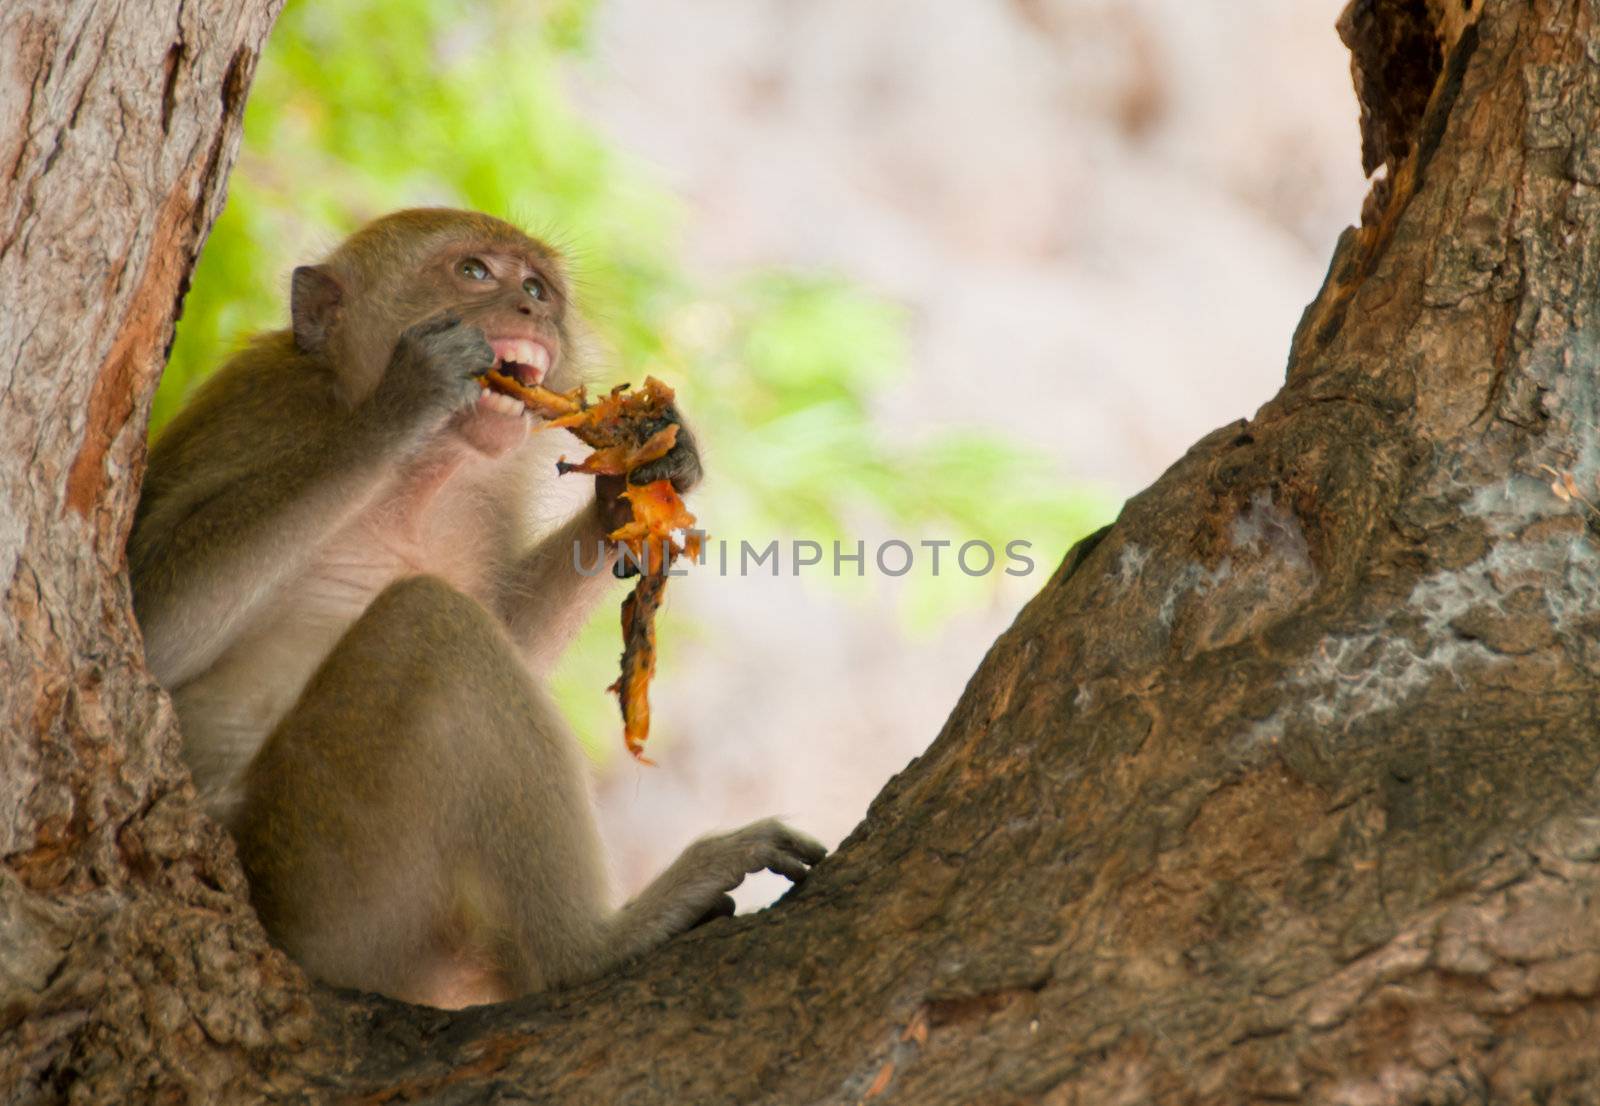  Monkey Lunch by urmoments